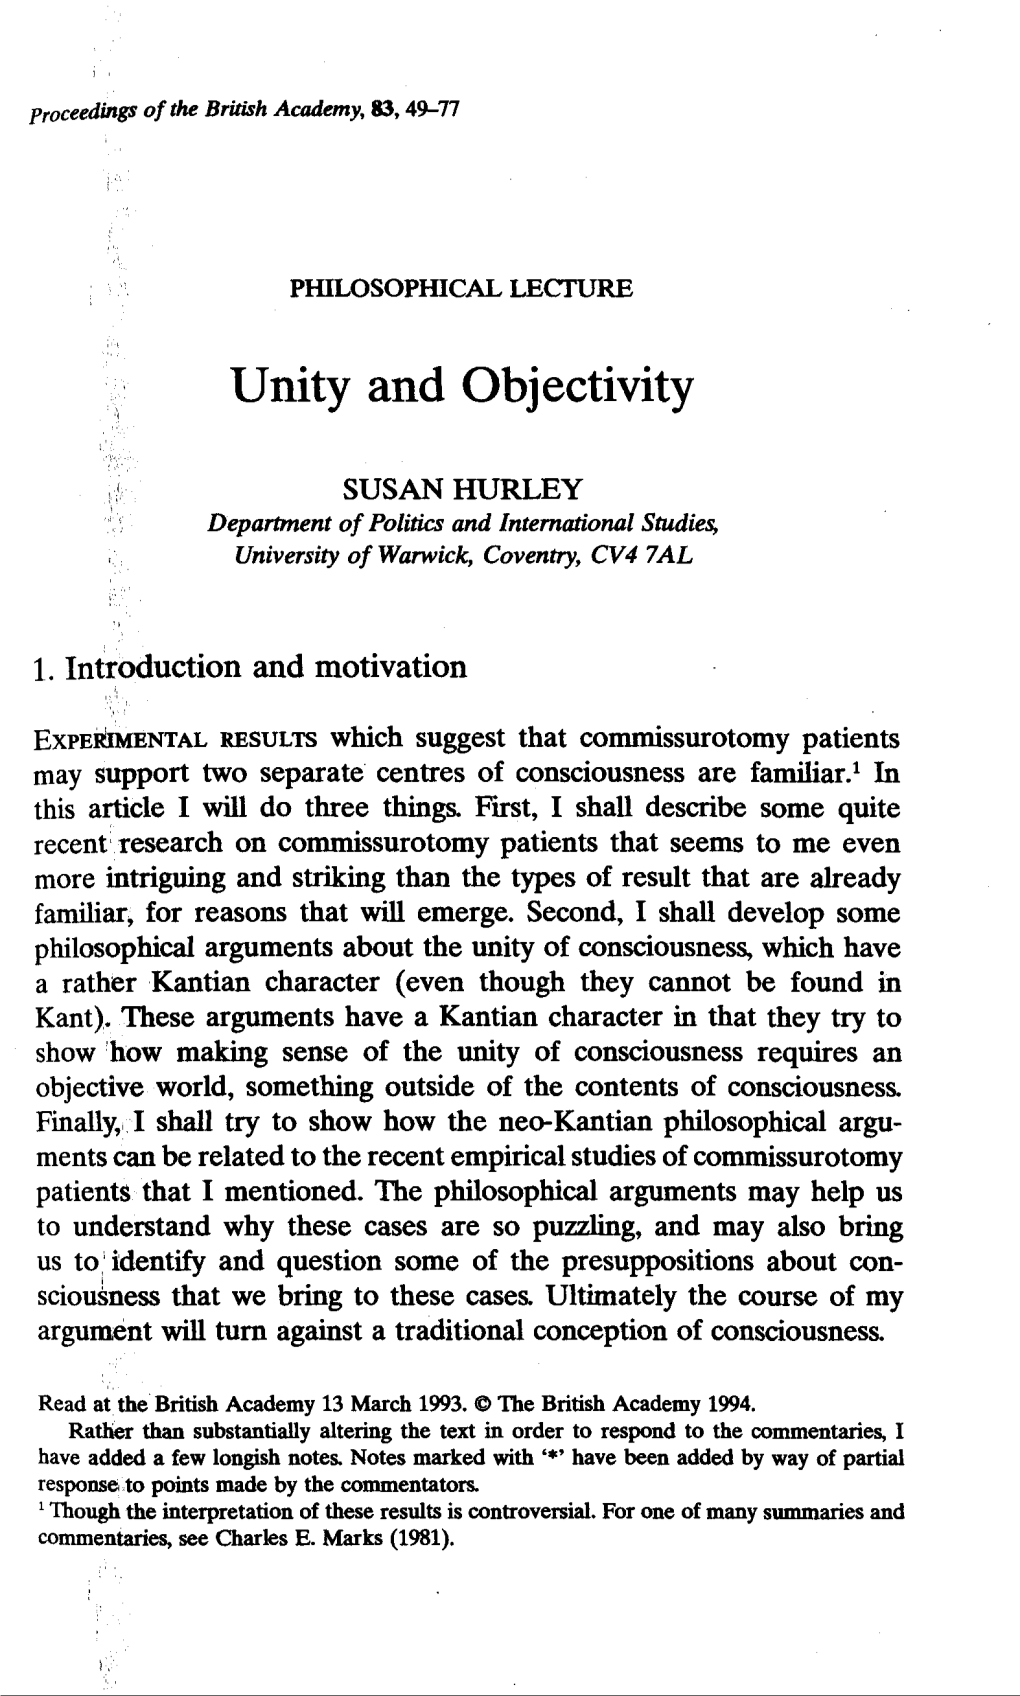 Unity and Objectivity